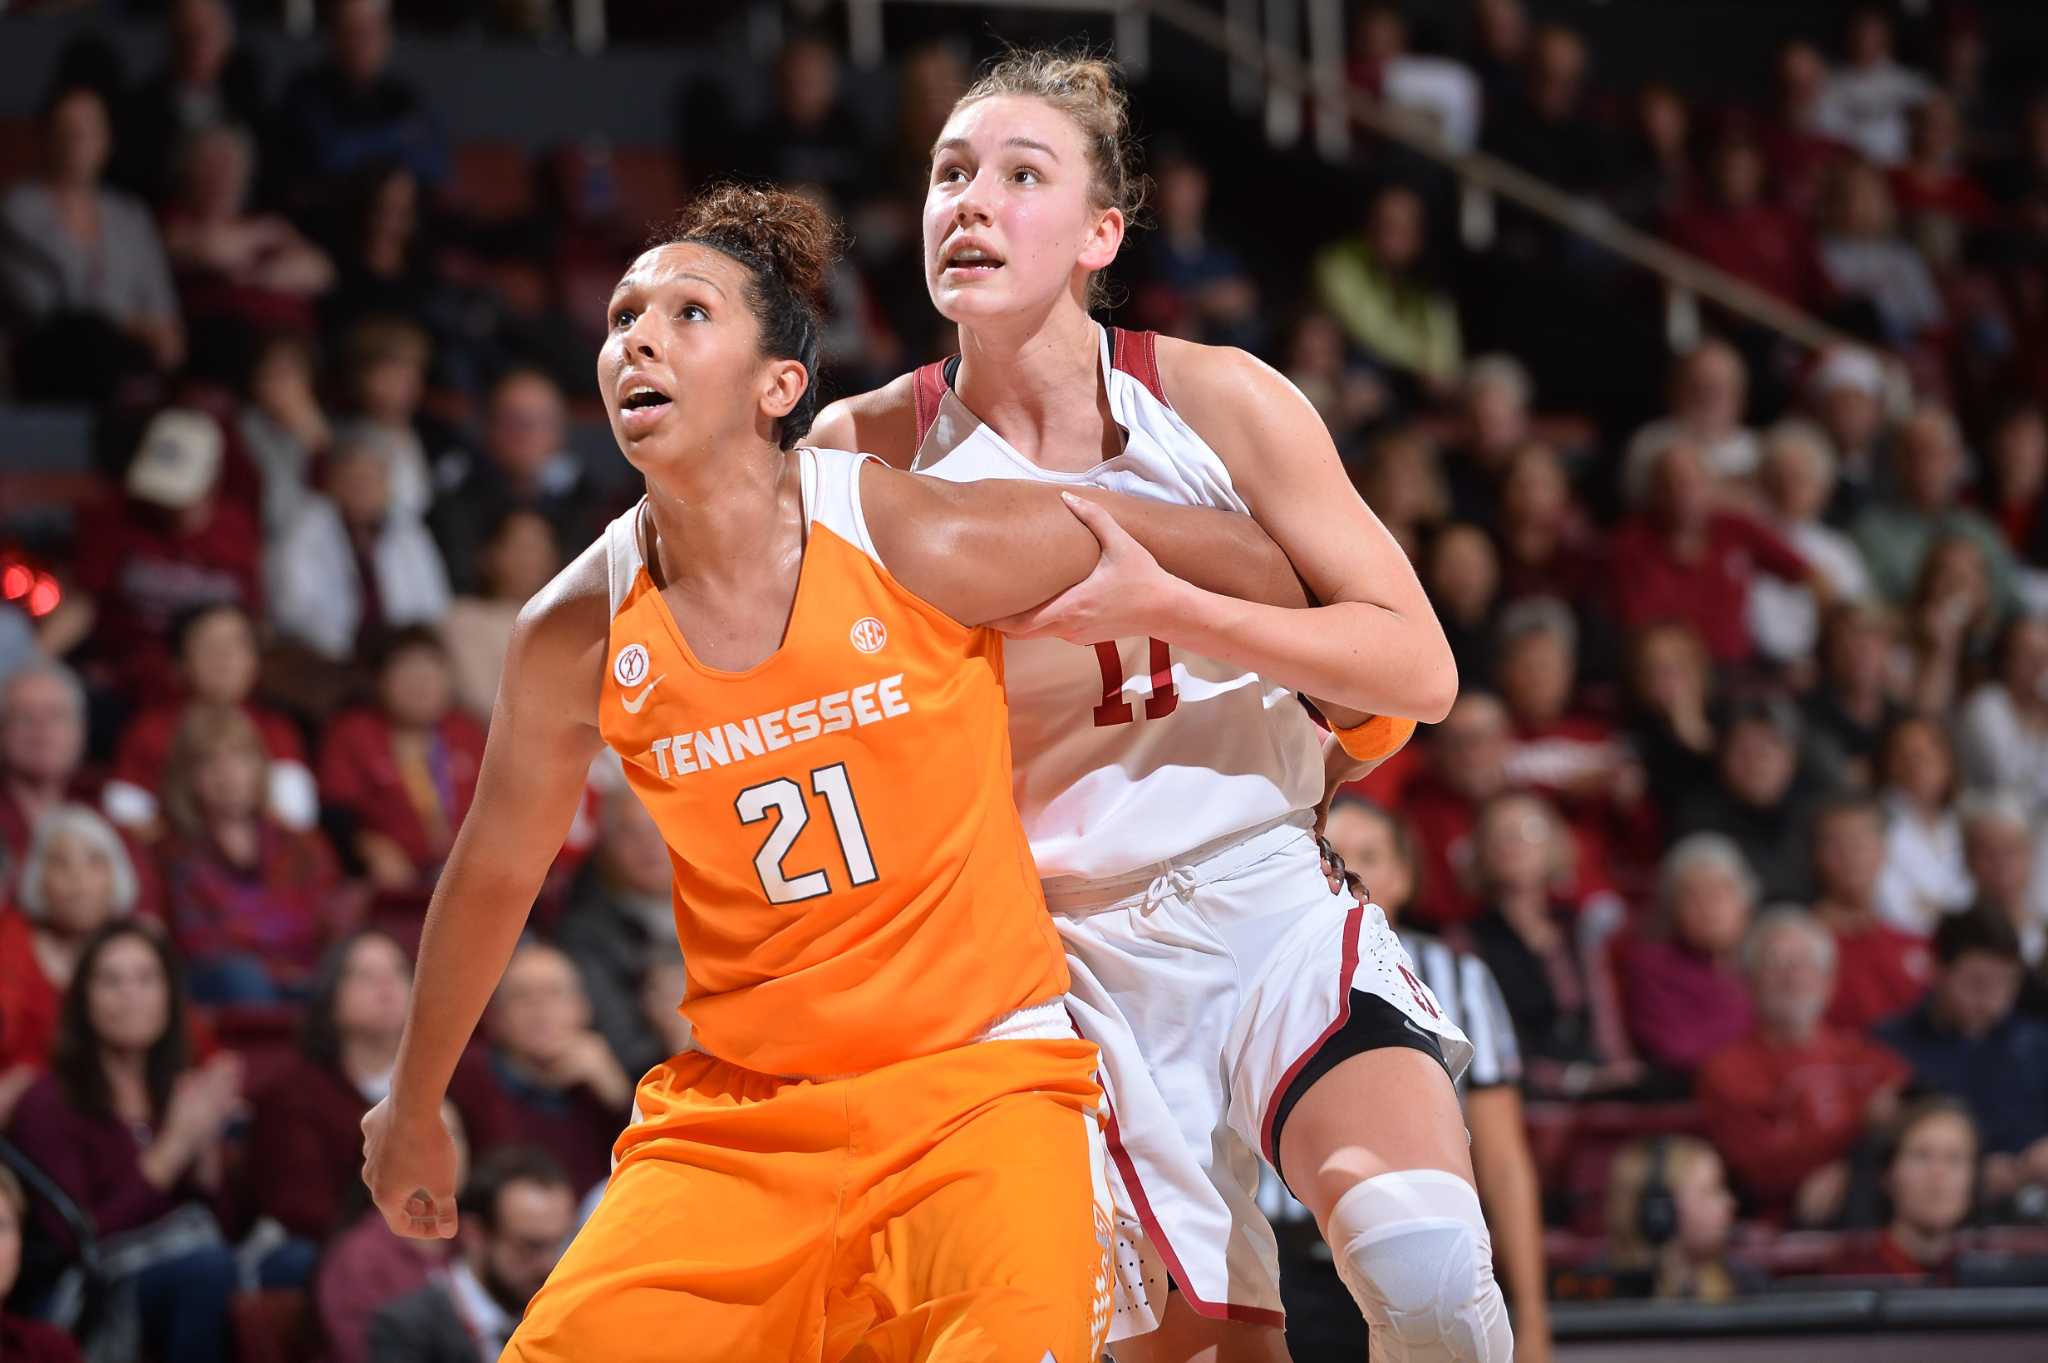 Stanford’s McPhee enjoys terrific return, but Tennessee prevails